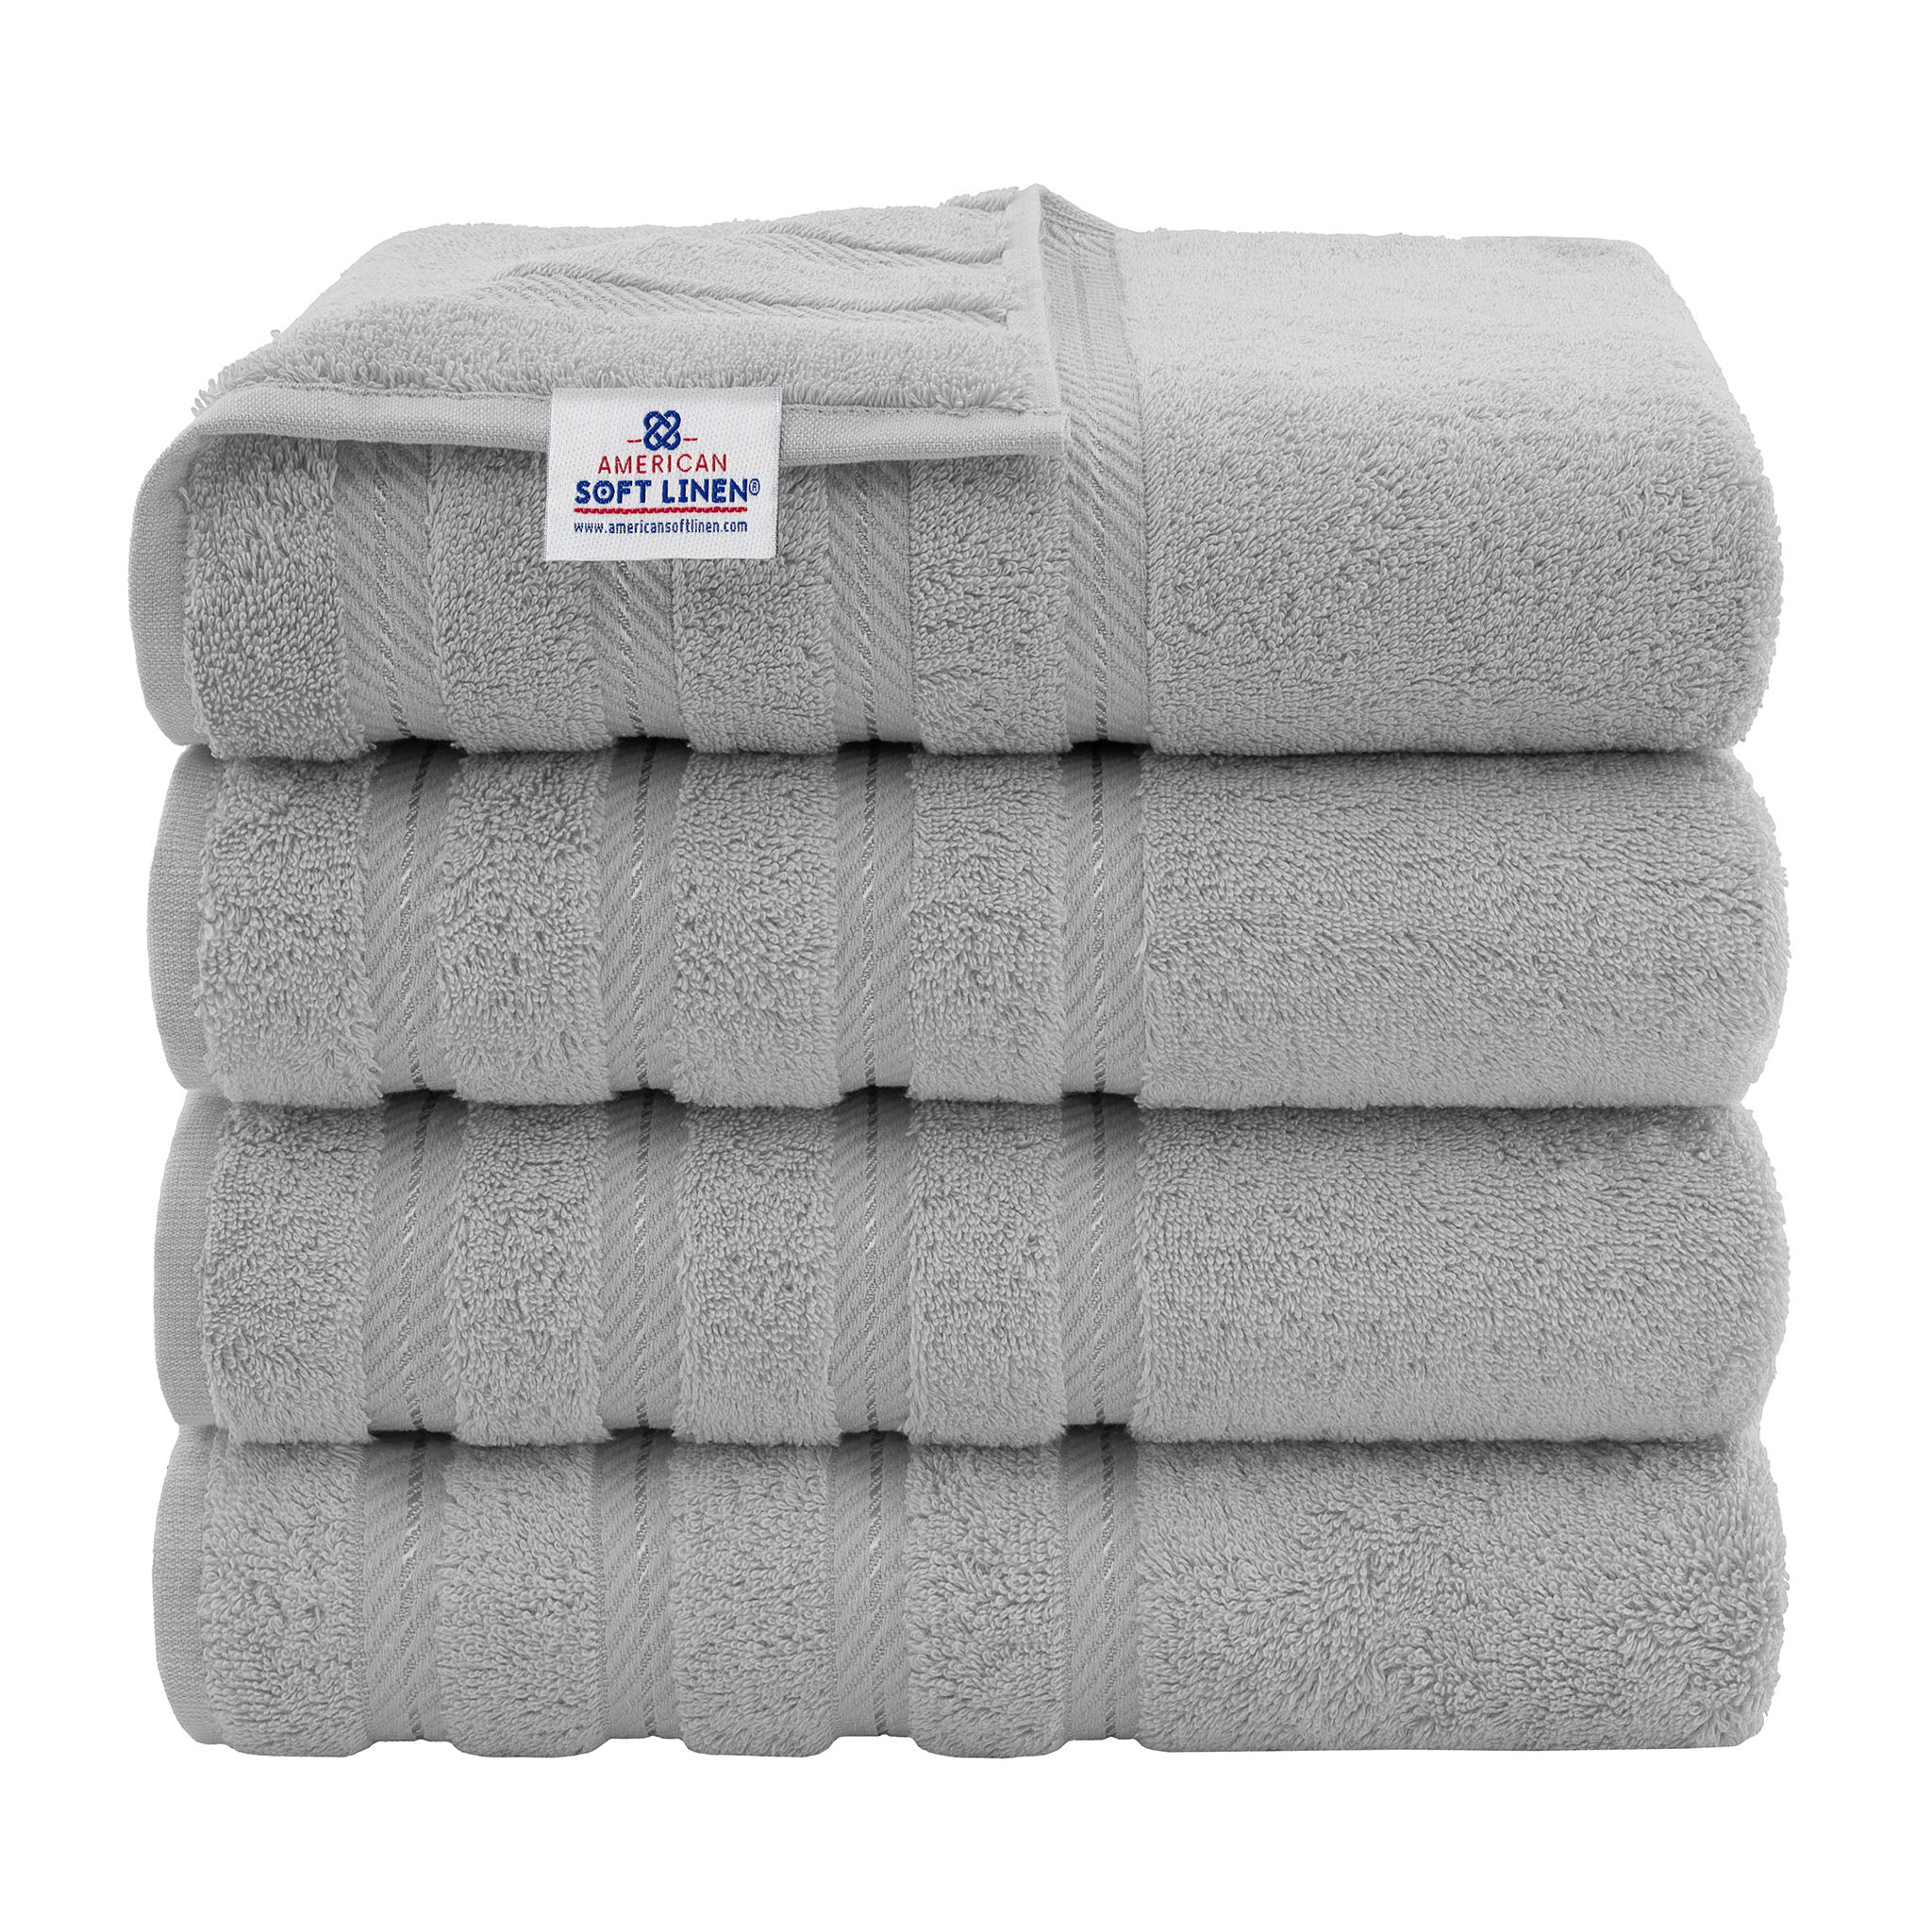 American Soft Linen 100% Turkish Cotton 4 Pack Bath Towel Set rockridge-gray-1